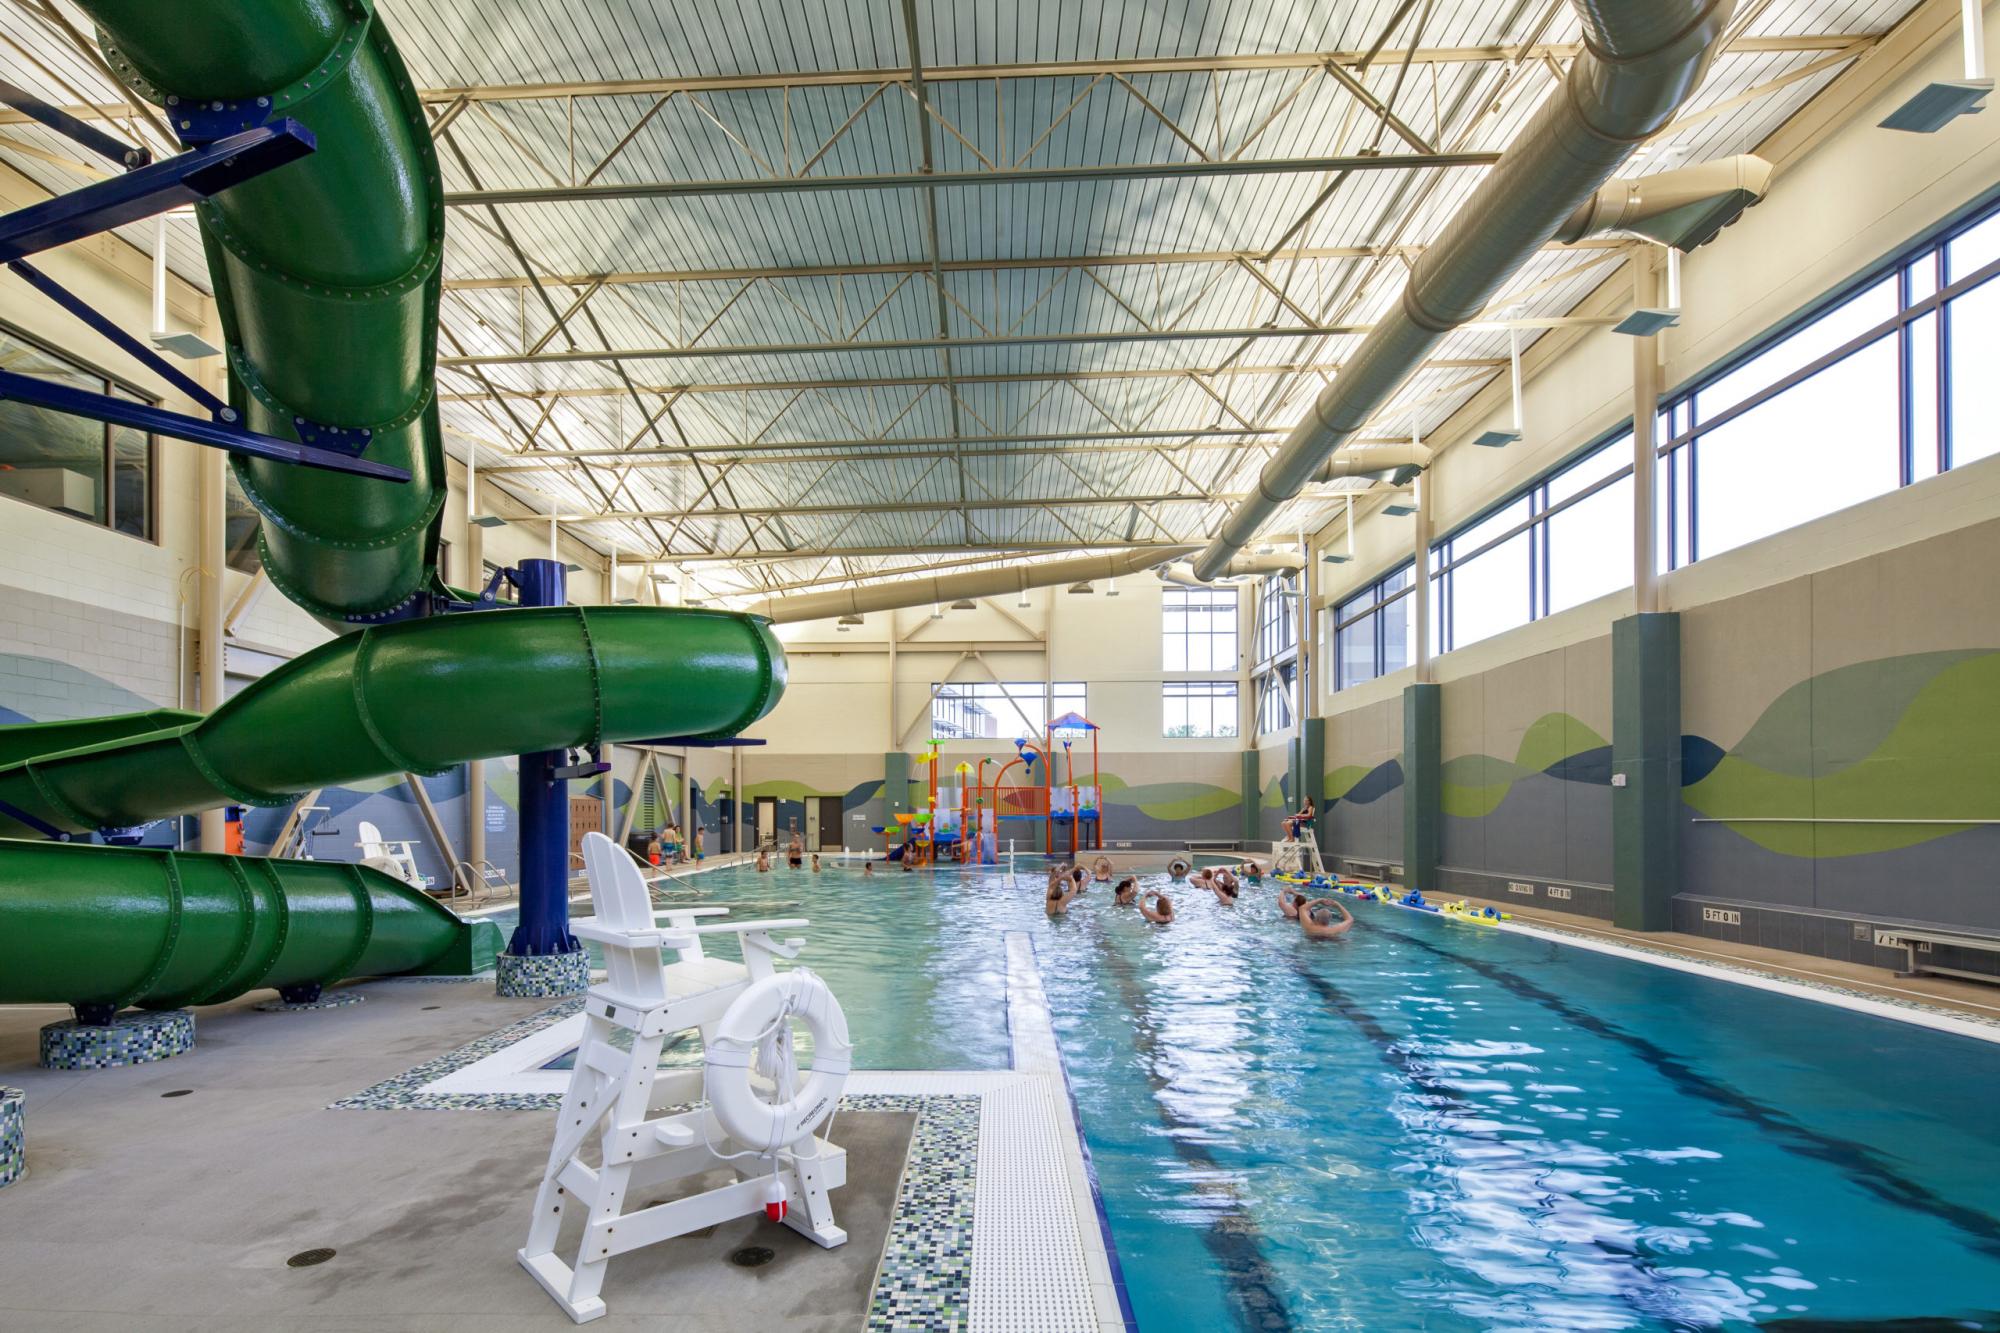 bridgeton community center pool